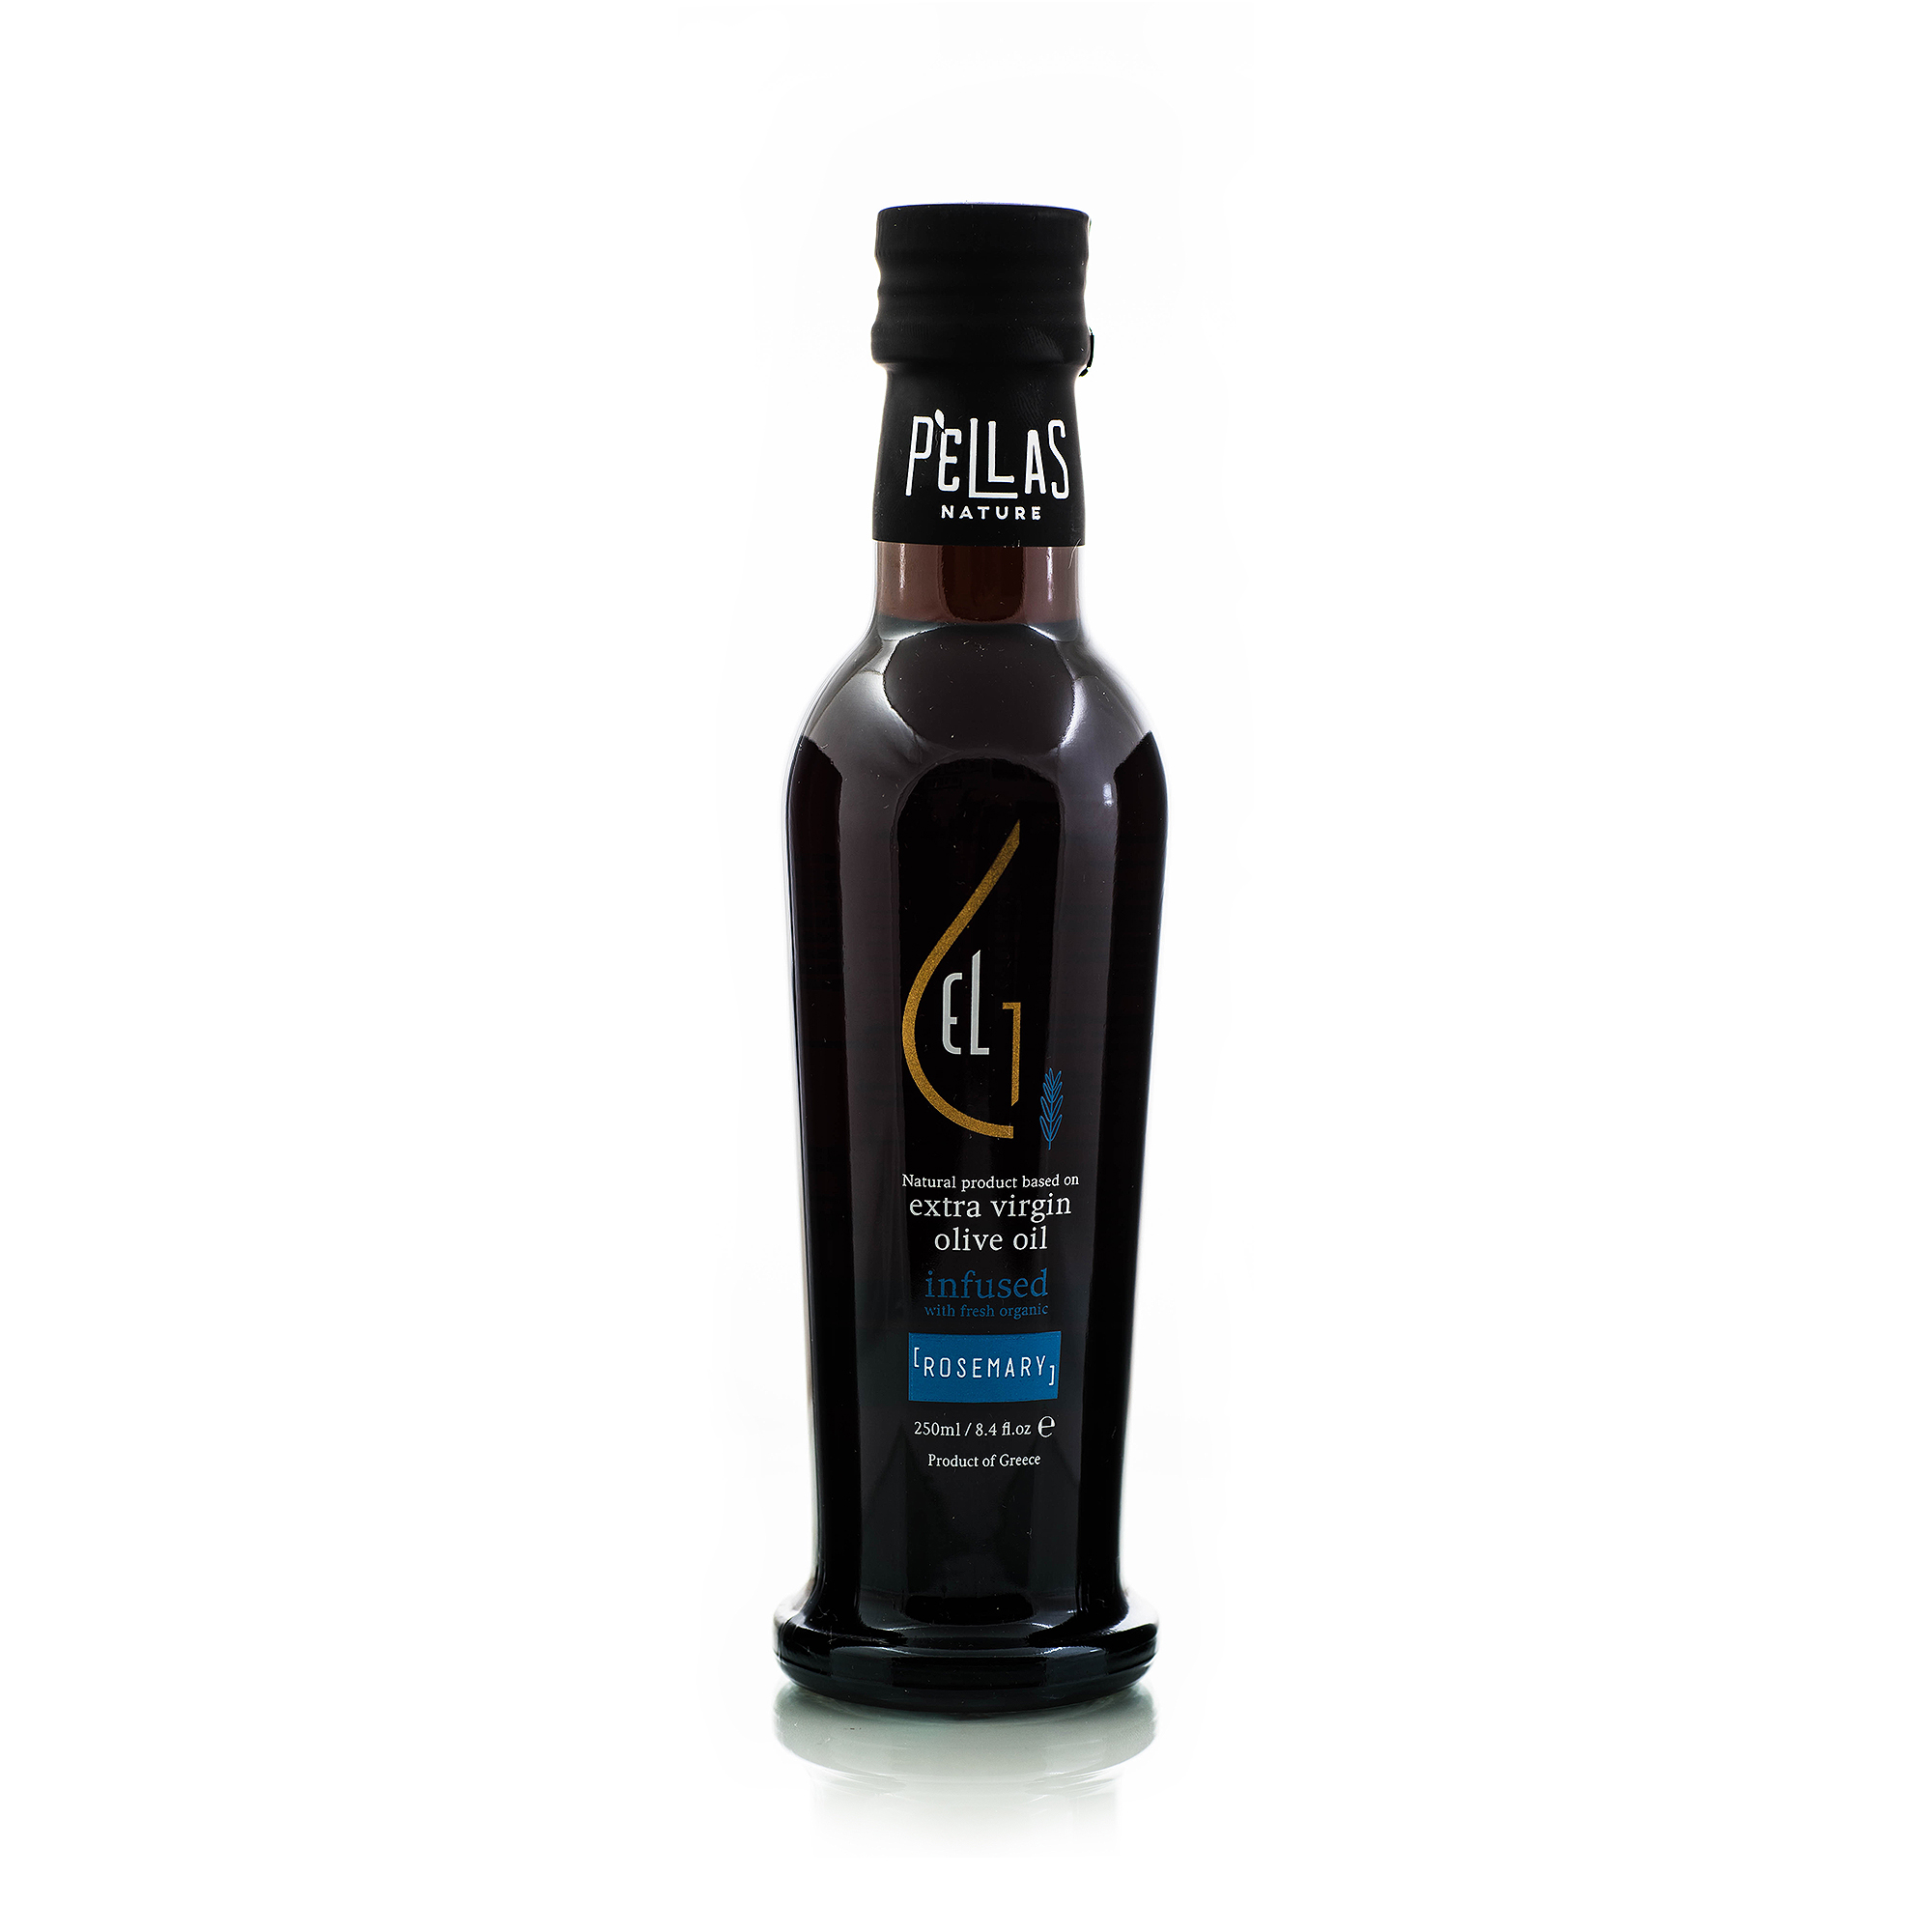 Pellas Nature Rosemary infused Olive Oil 8.45 oz Bottle